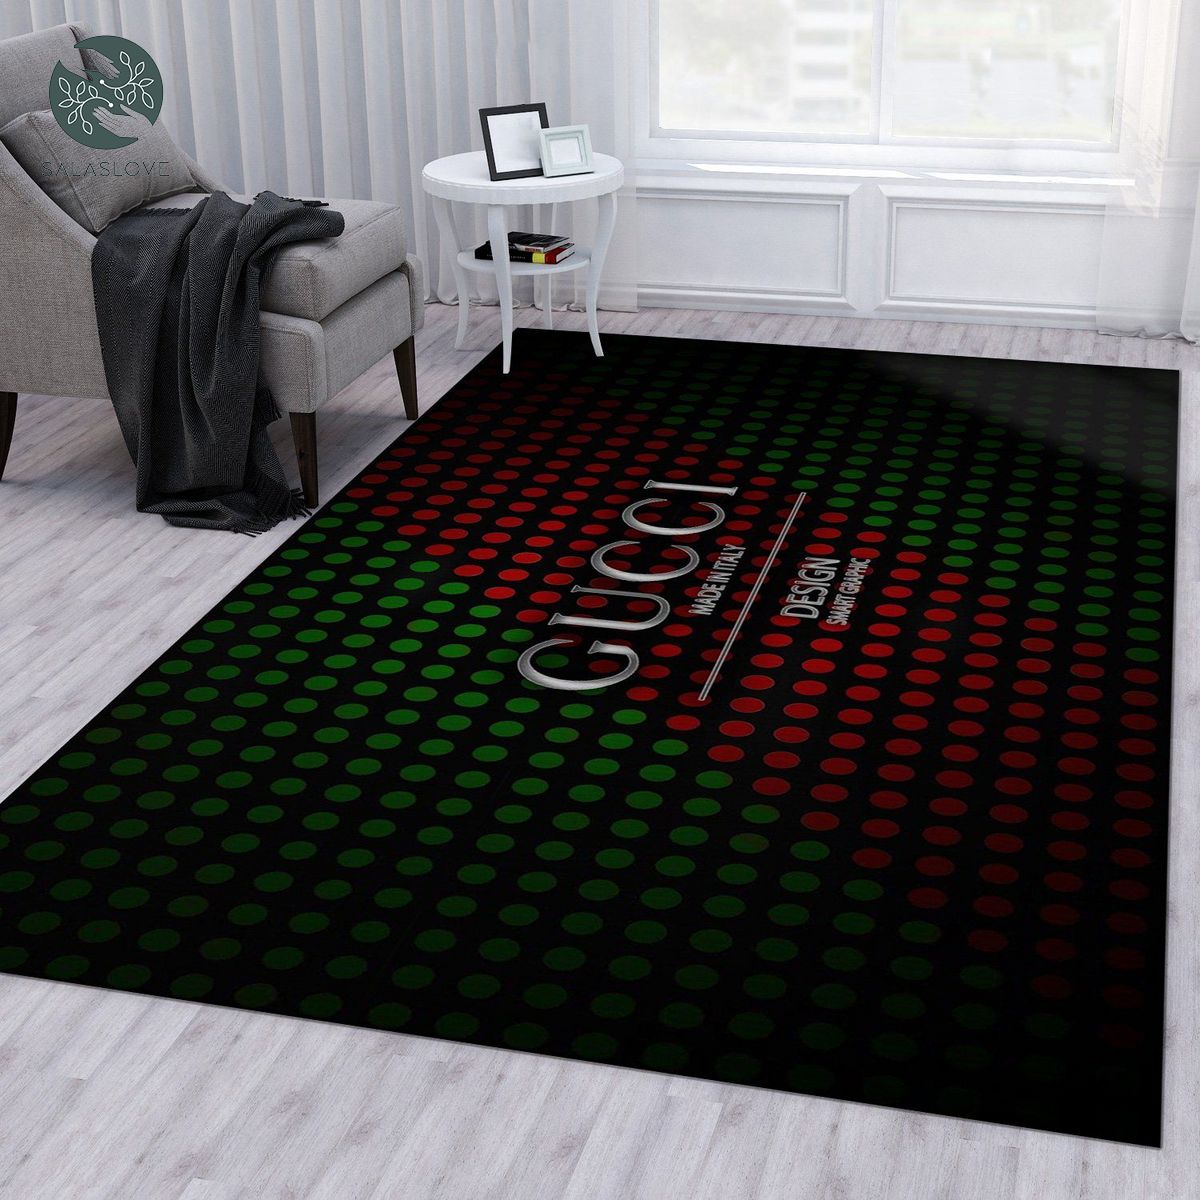 Gucci fashion brand rug bedroom rug family decor